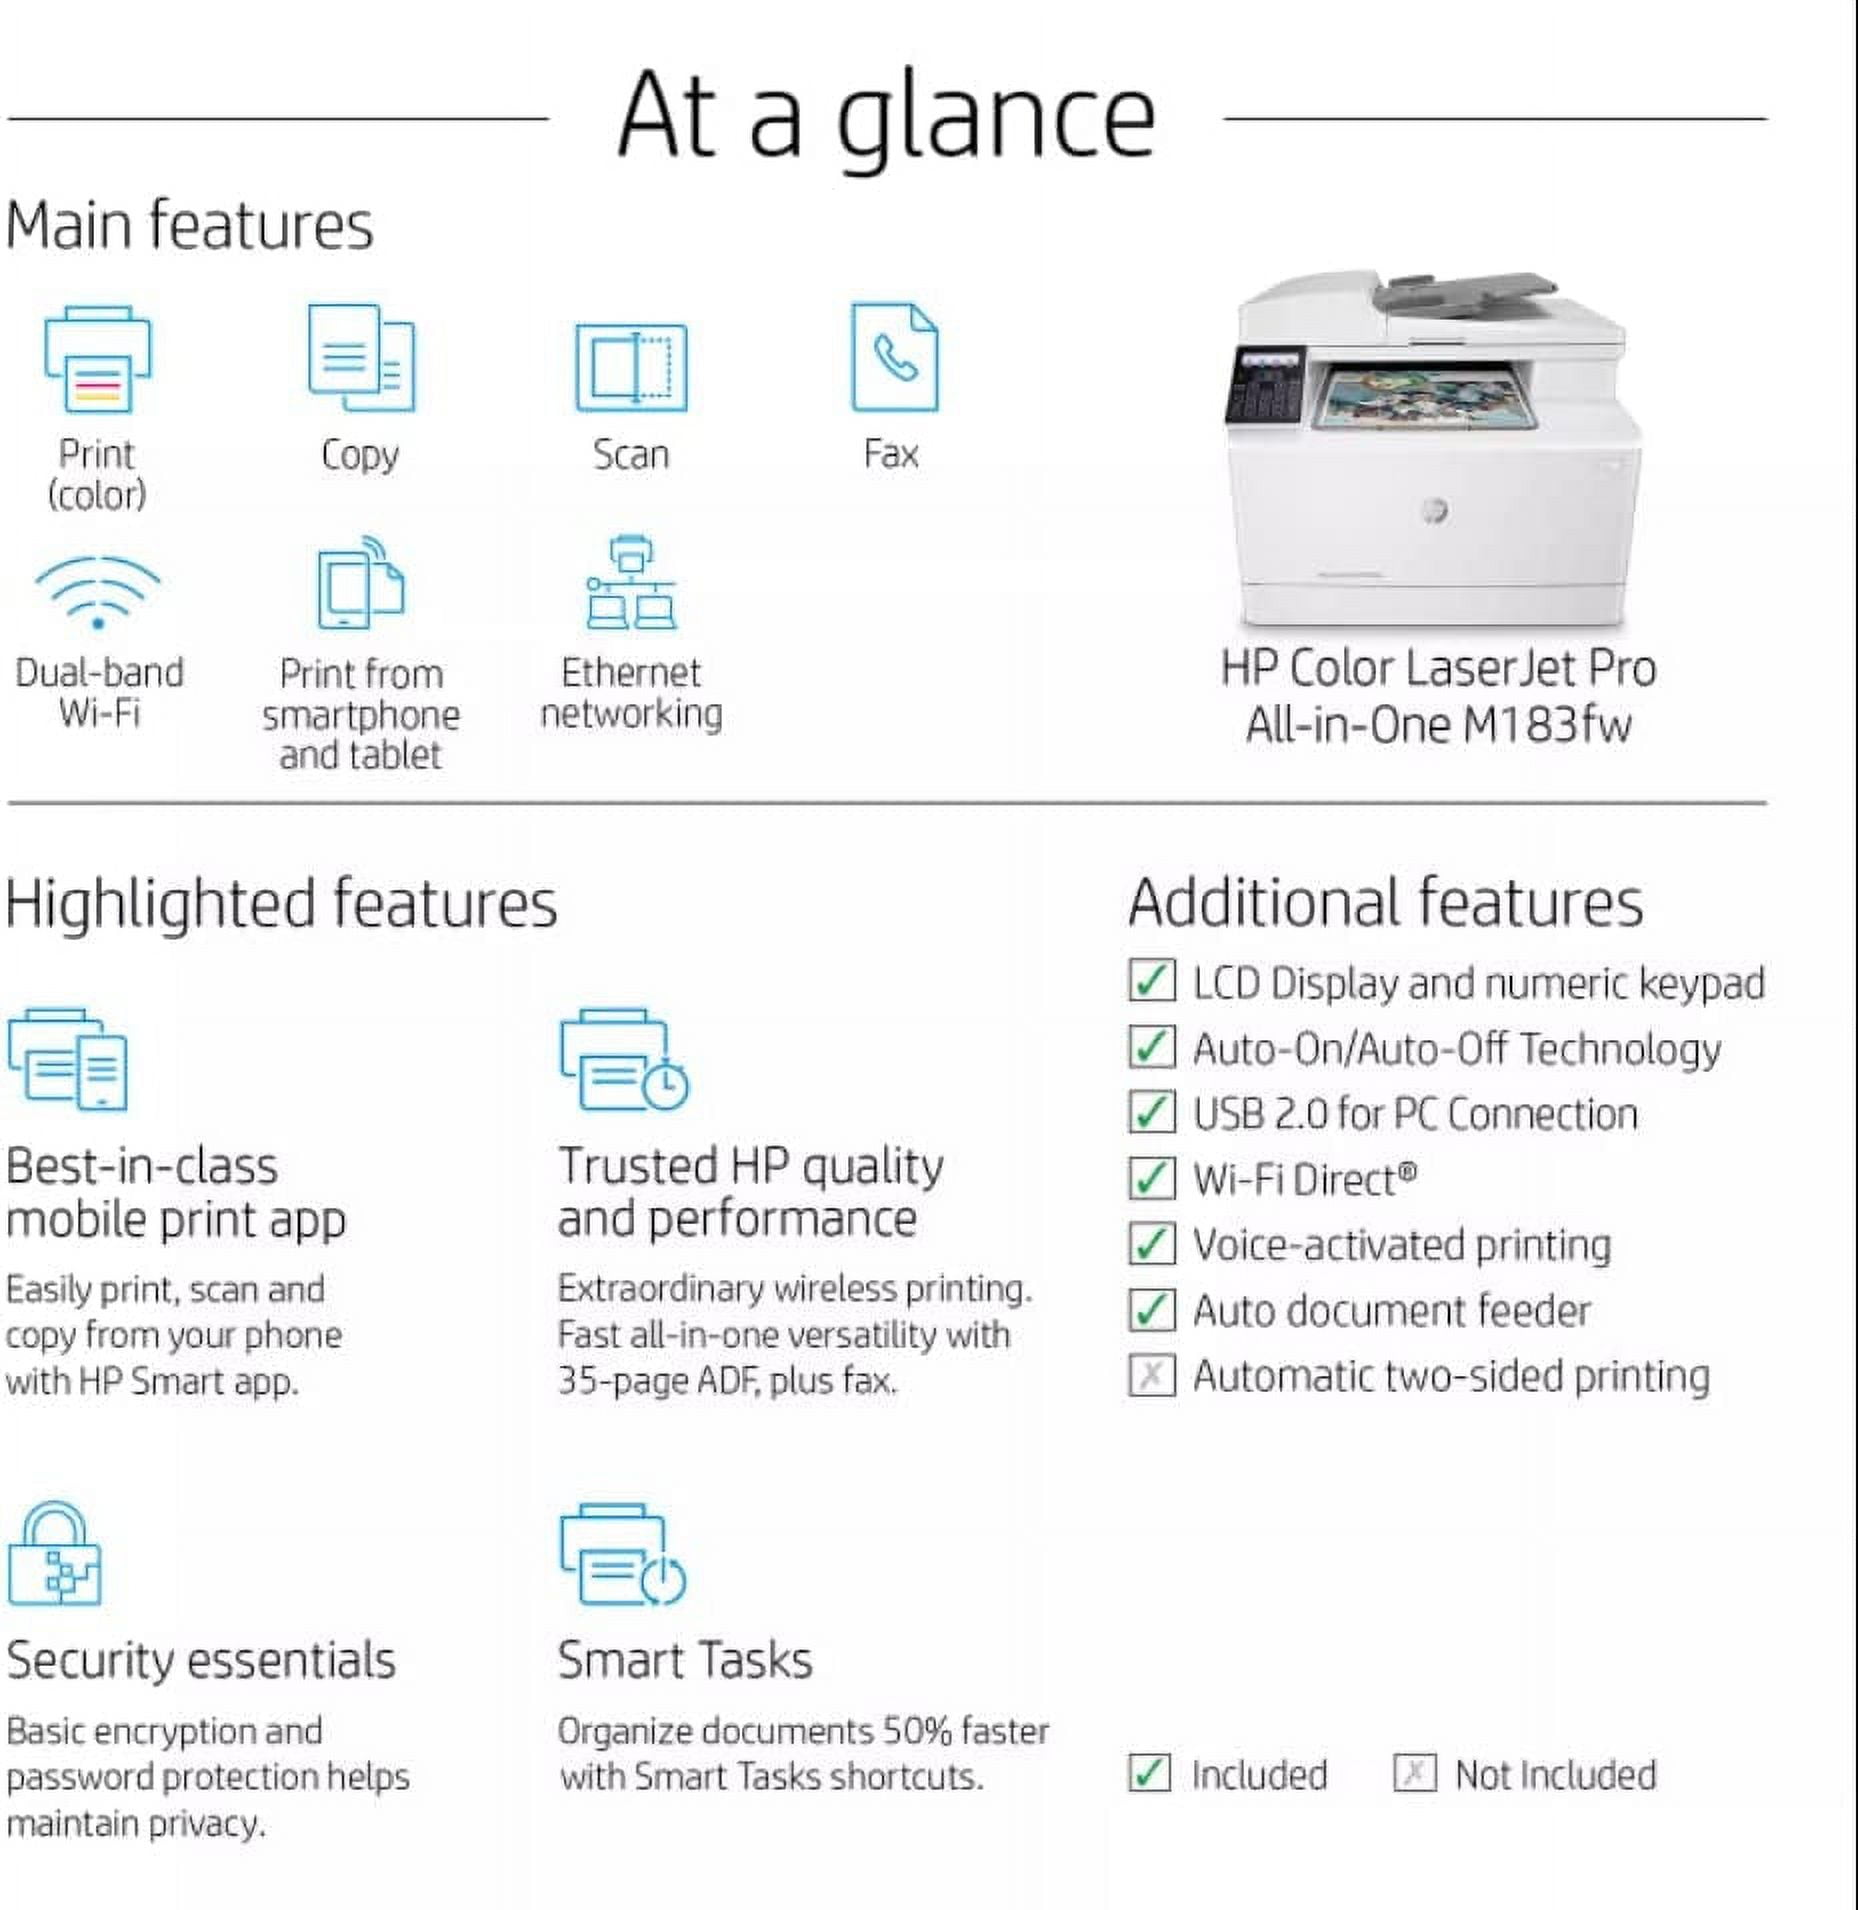 Impresora multifunción láser - Color LaserJet Pro MFP M183fw HP